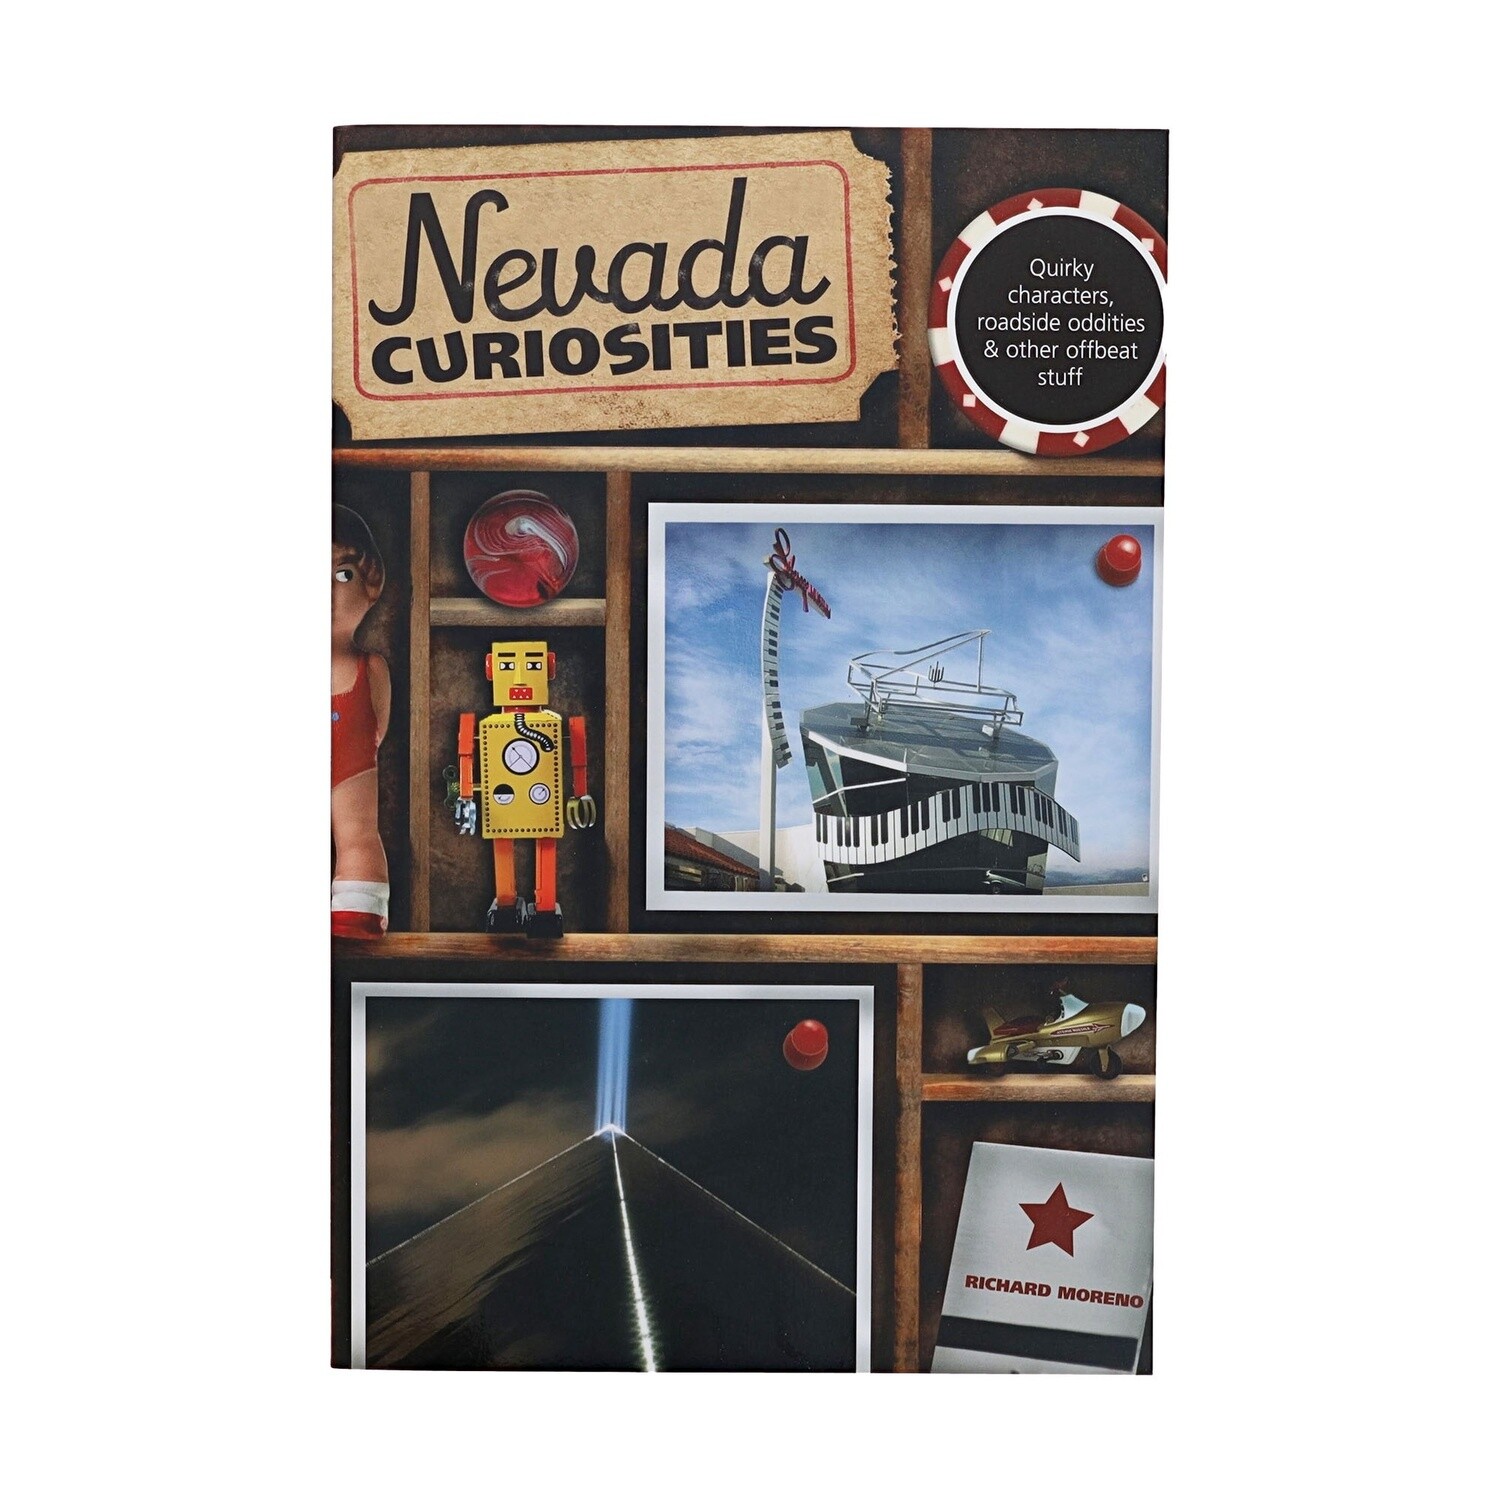 Nevada Curiosities by Richard Moreno